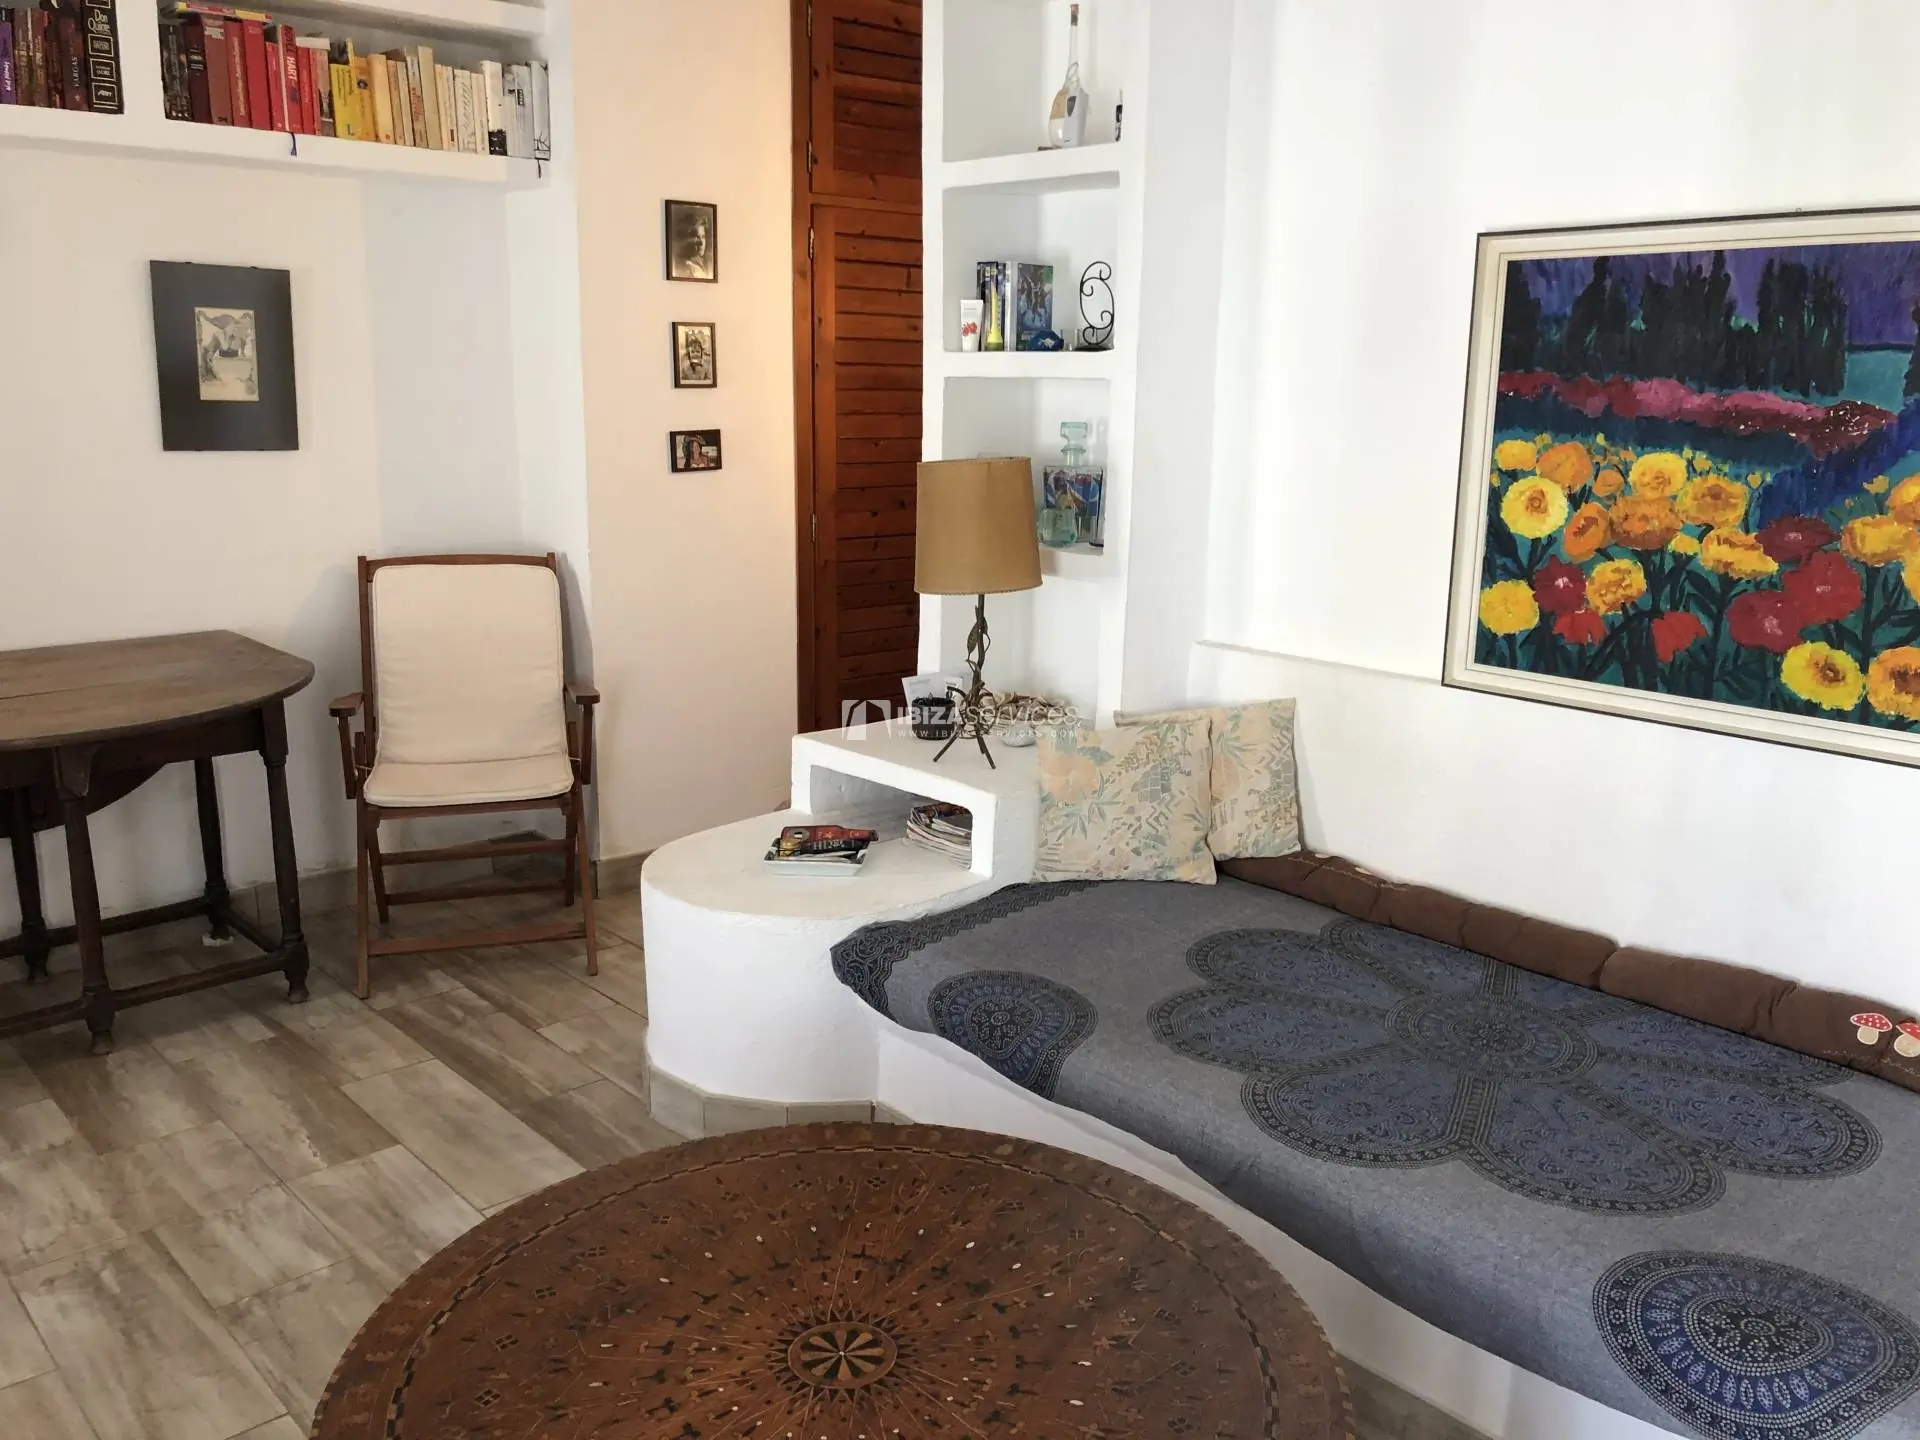 Marina Ibiza, 2 bedroom penthouse for rent